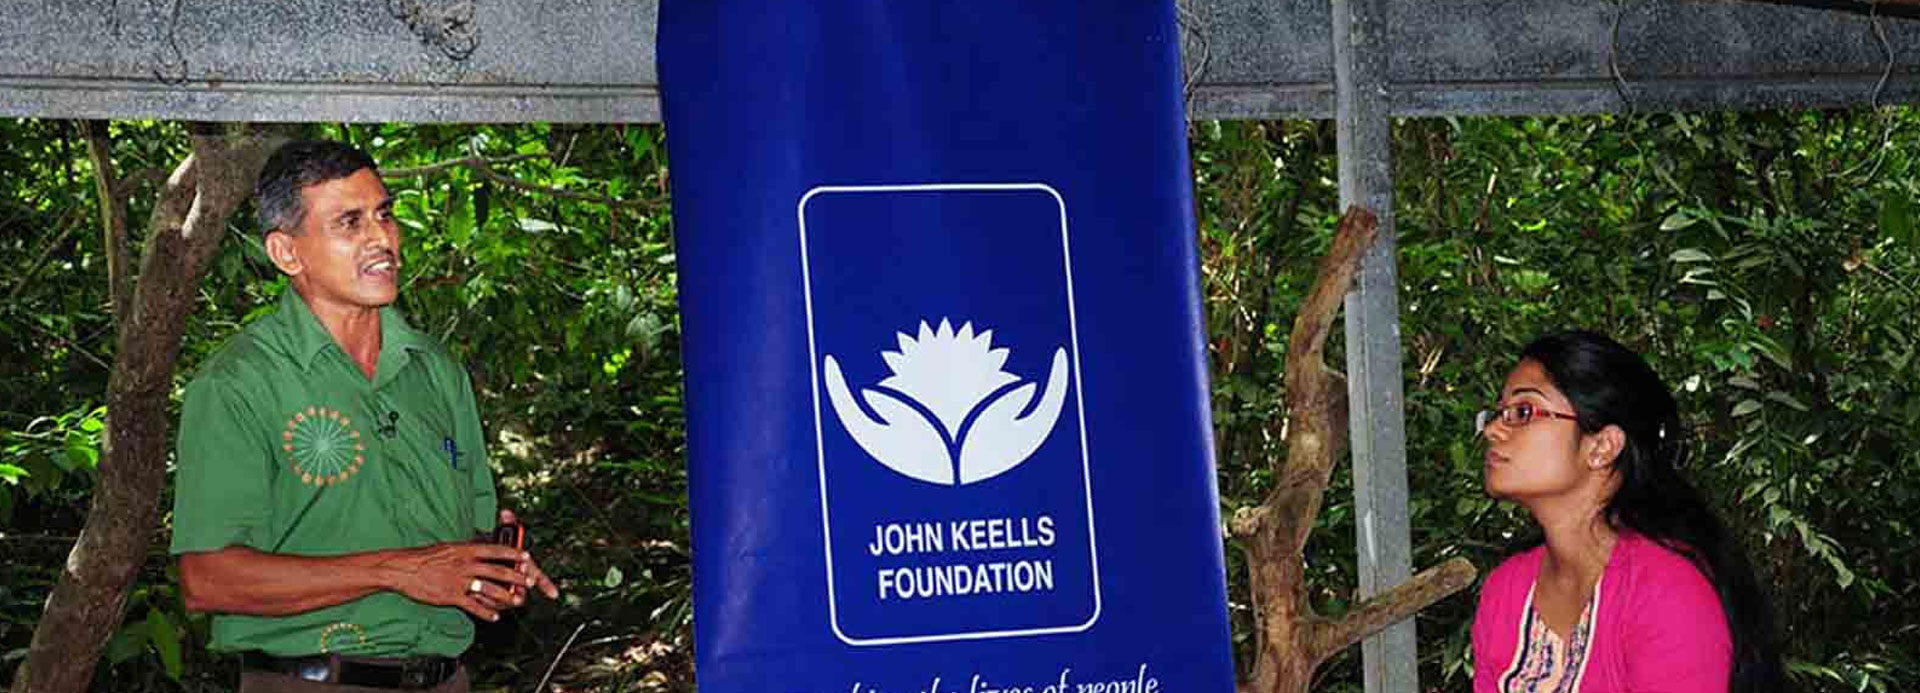 John Keells Foundation